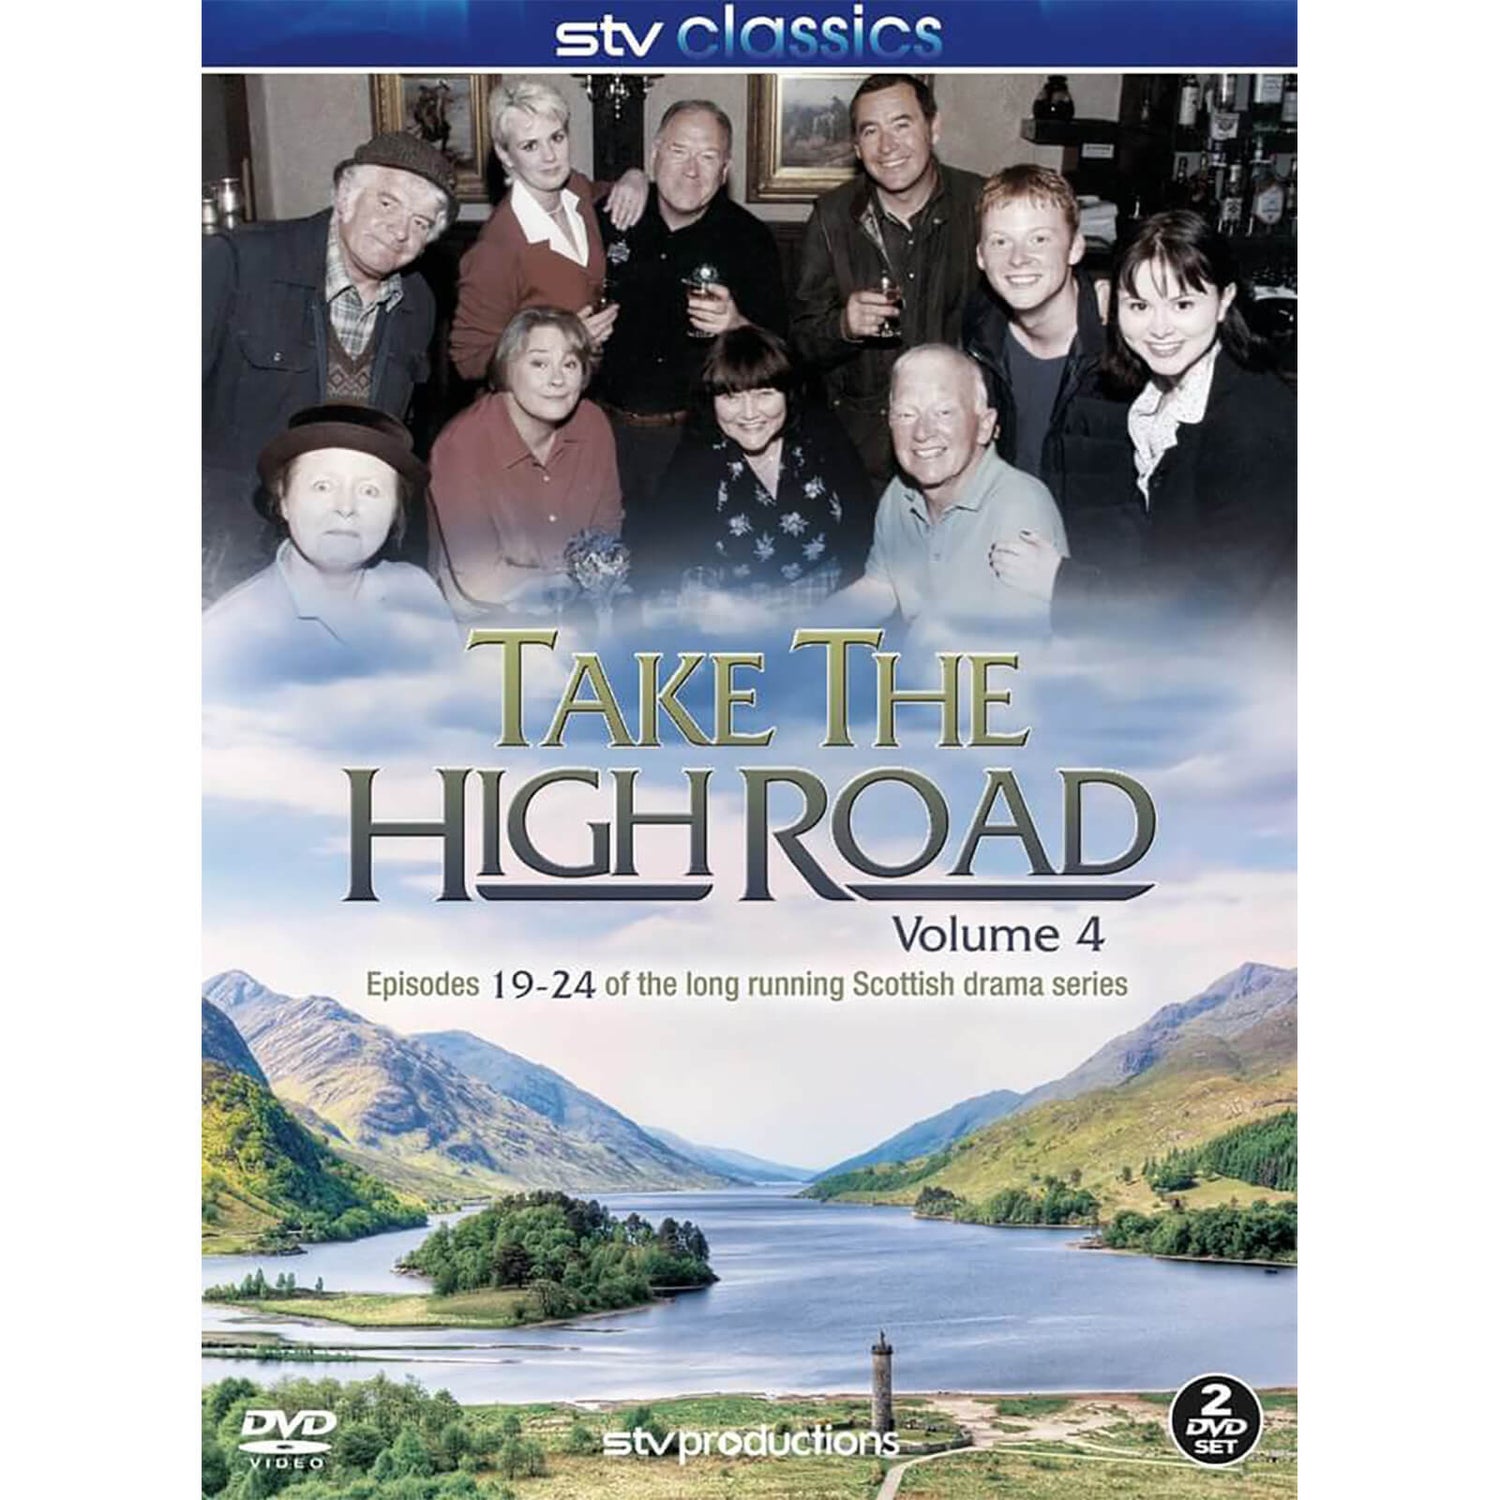 Take the High Road - Volume 4